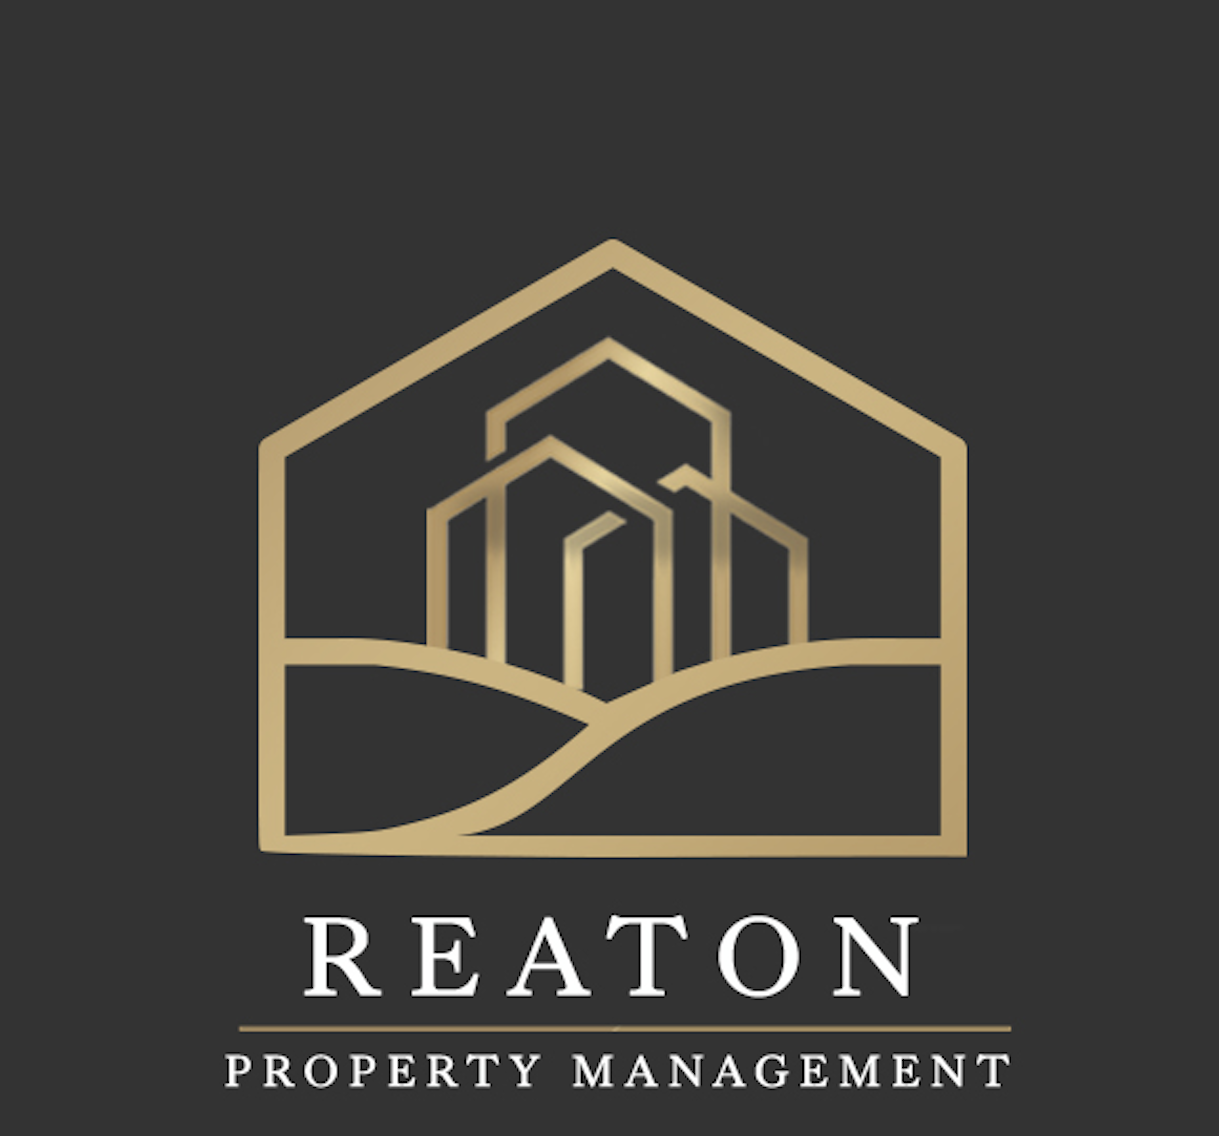 Reaton Property Management